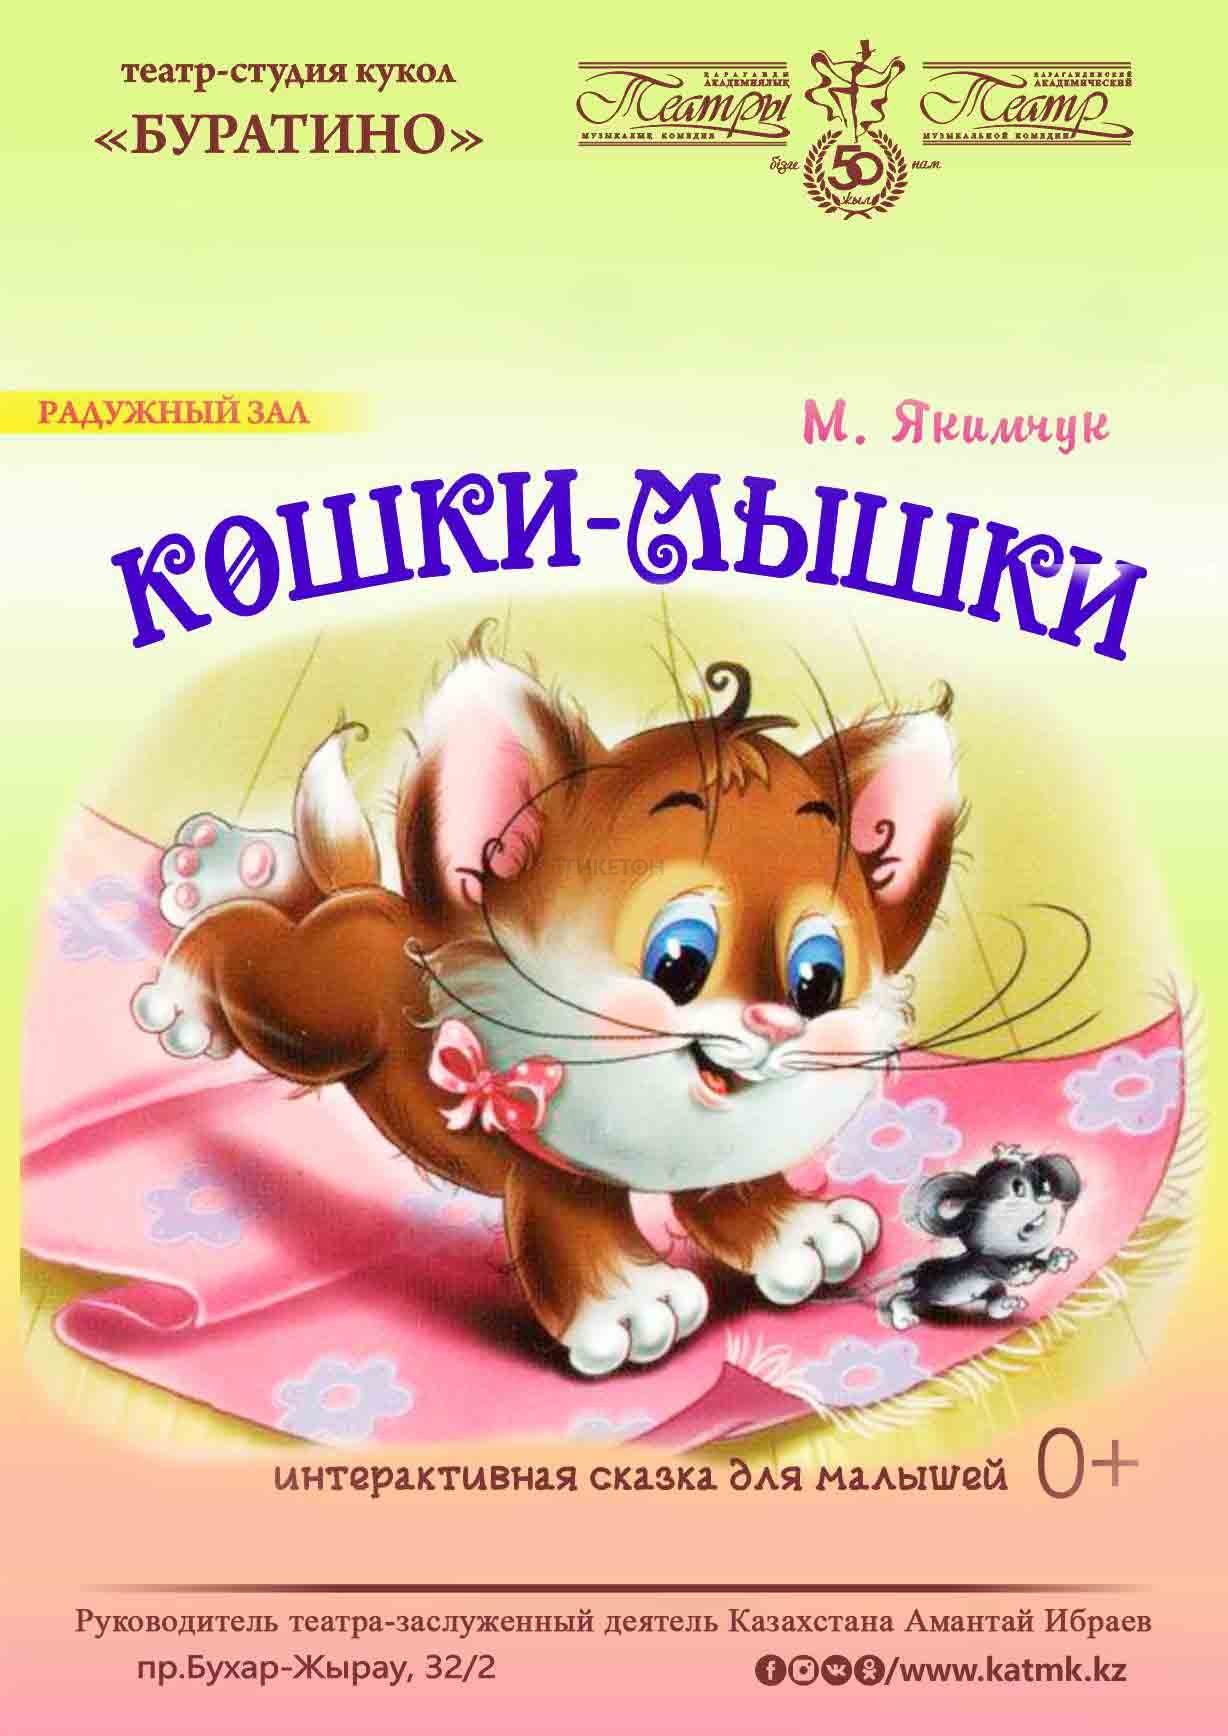 Кошки-мышки (КАТМК)